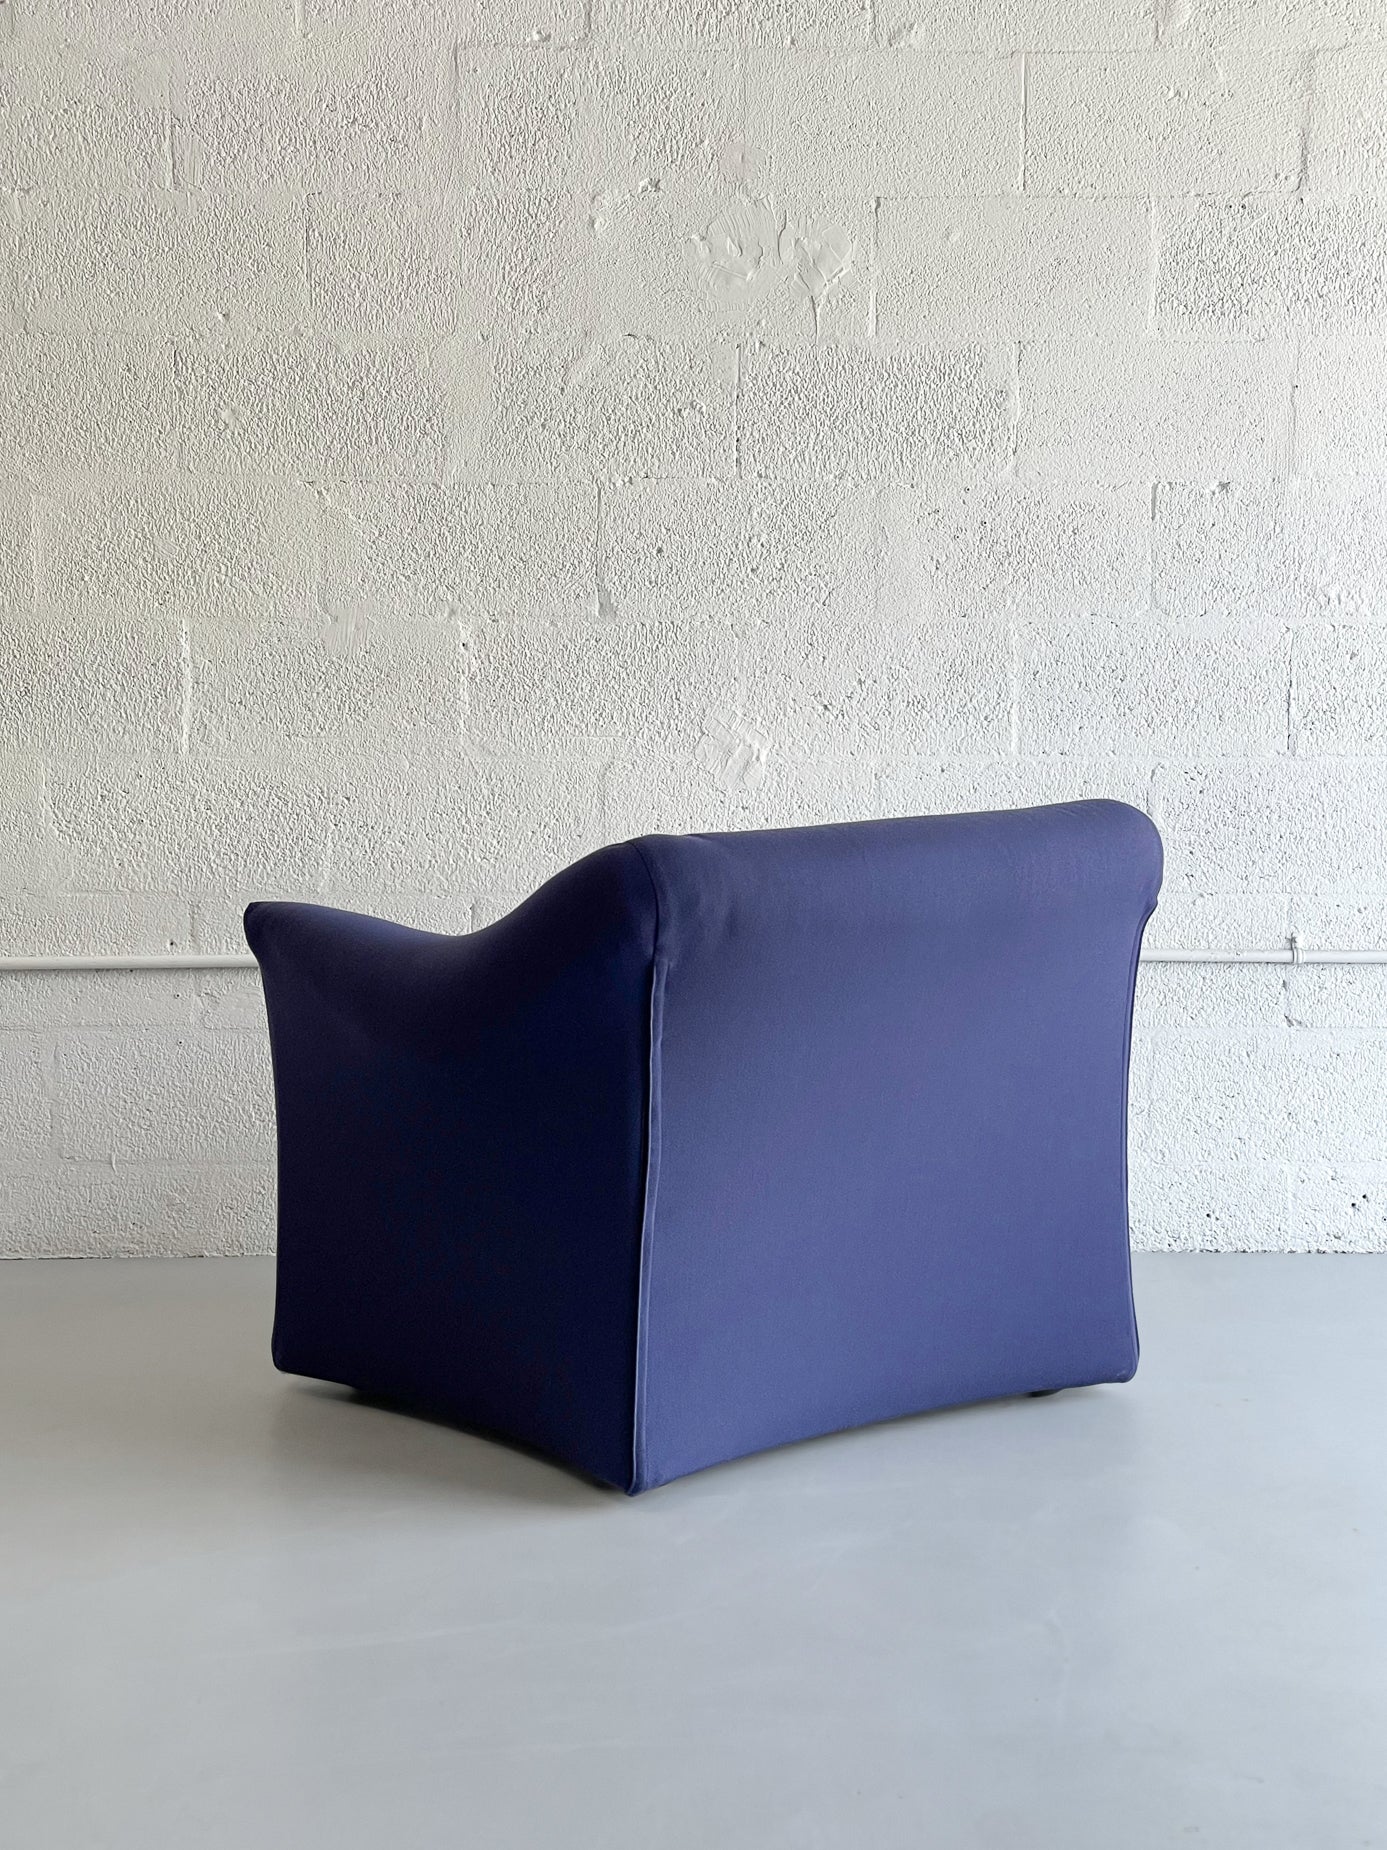 1970s Tentazione Lounge Chair by Mario Bellini for Cassina